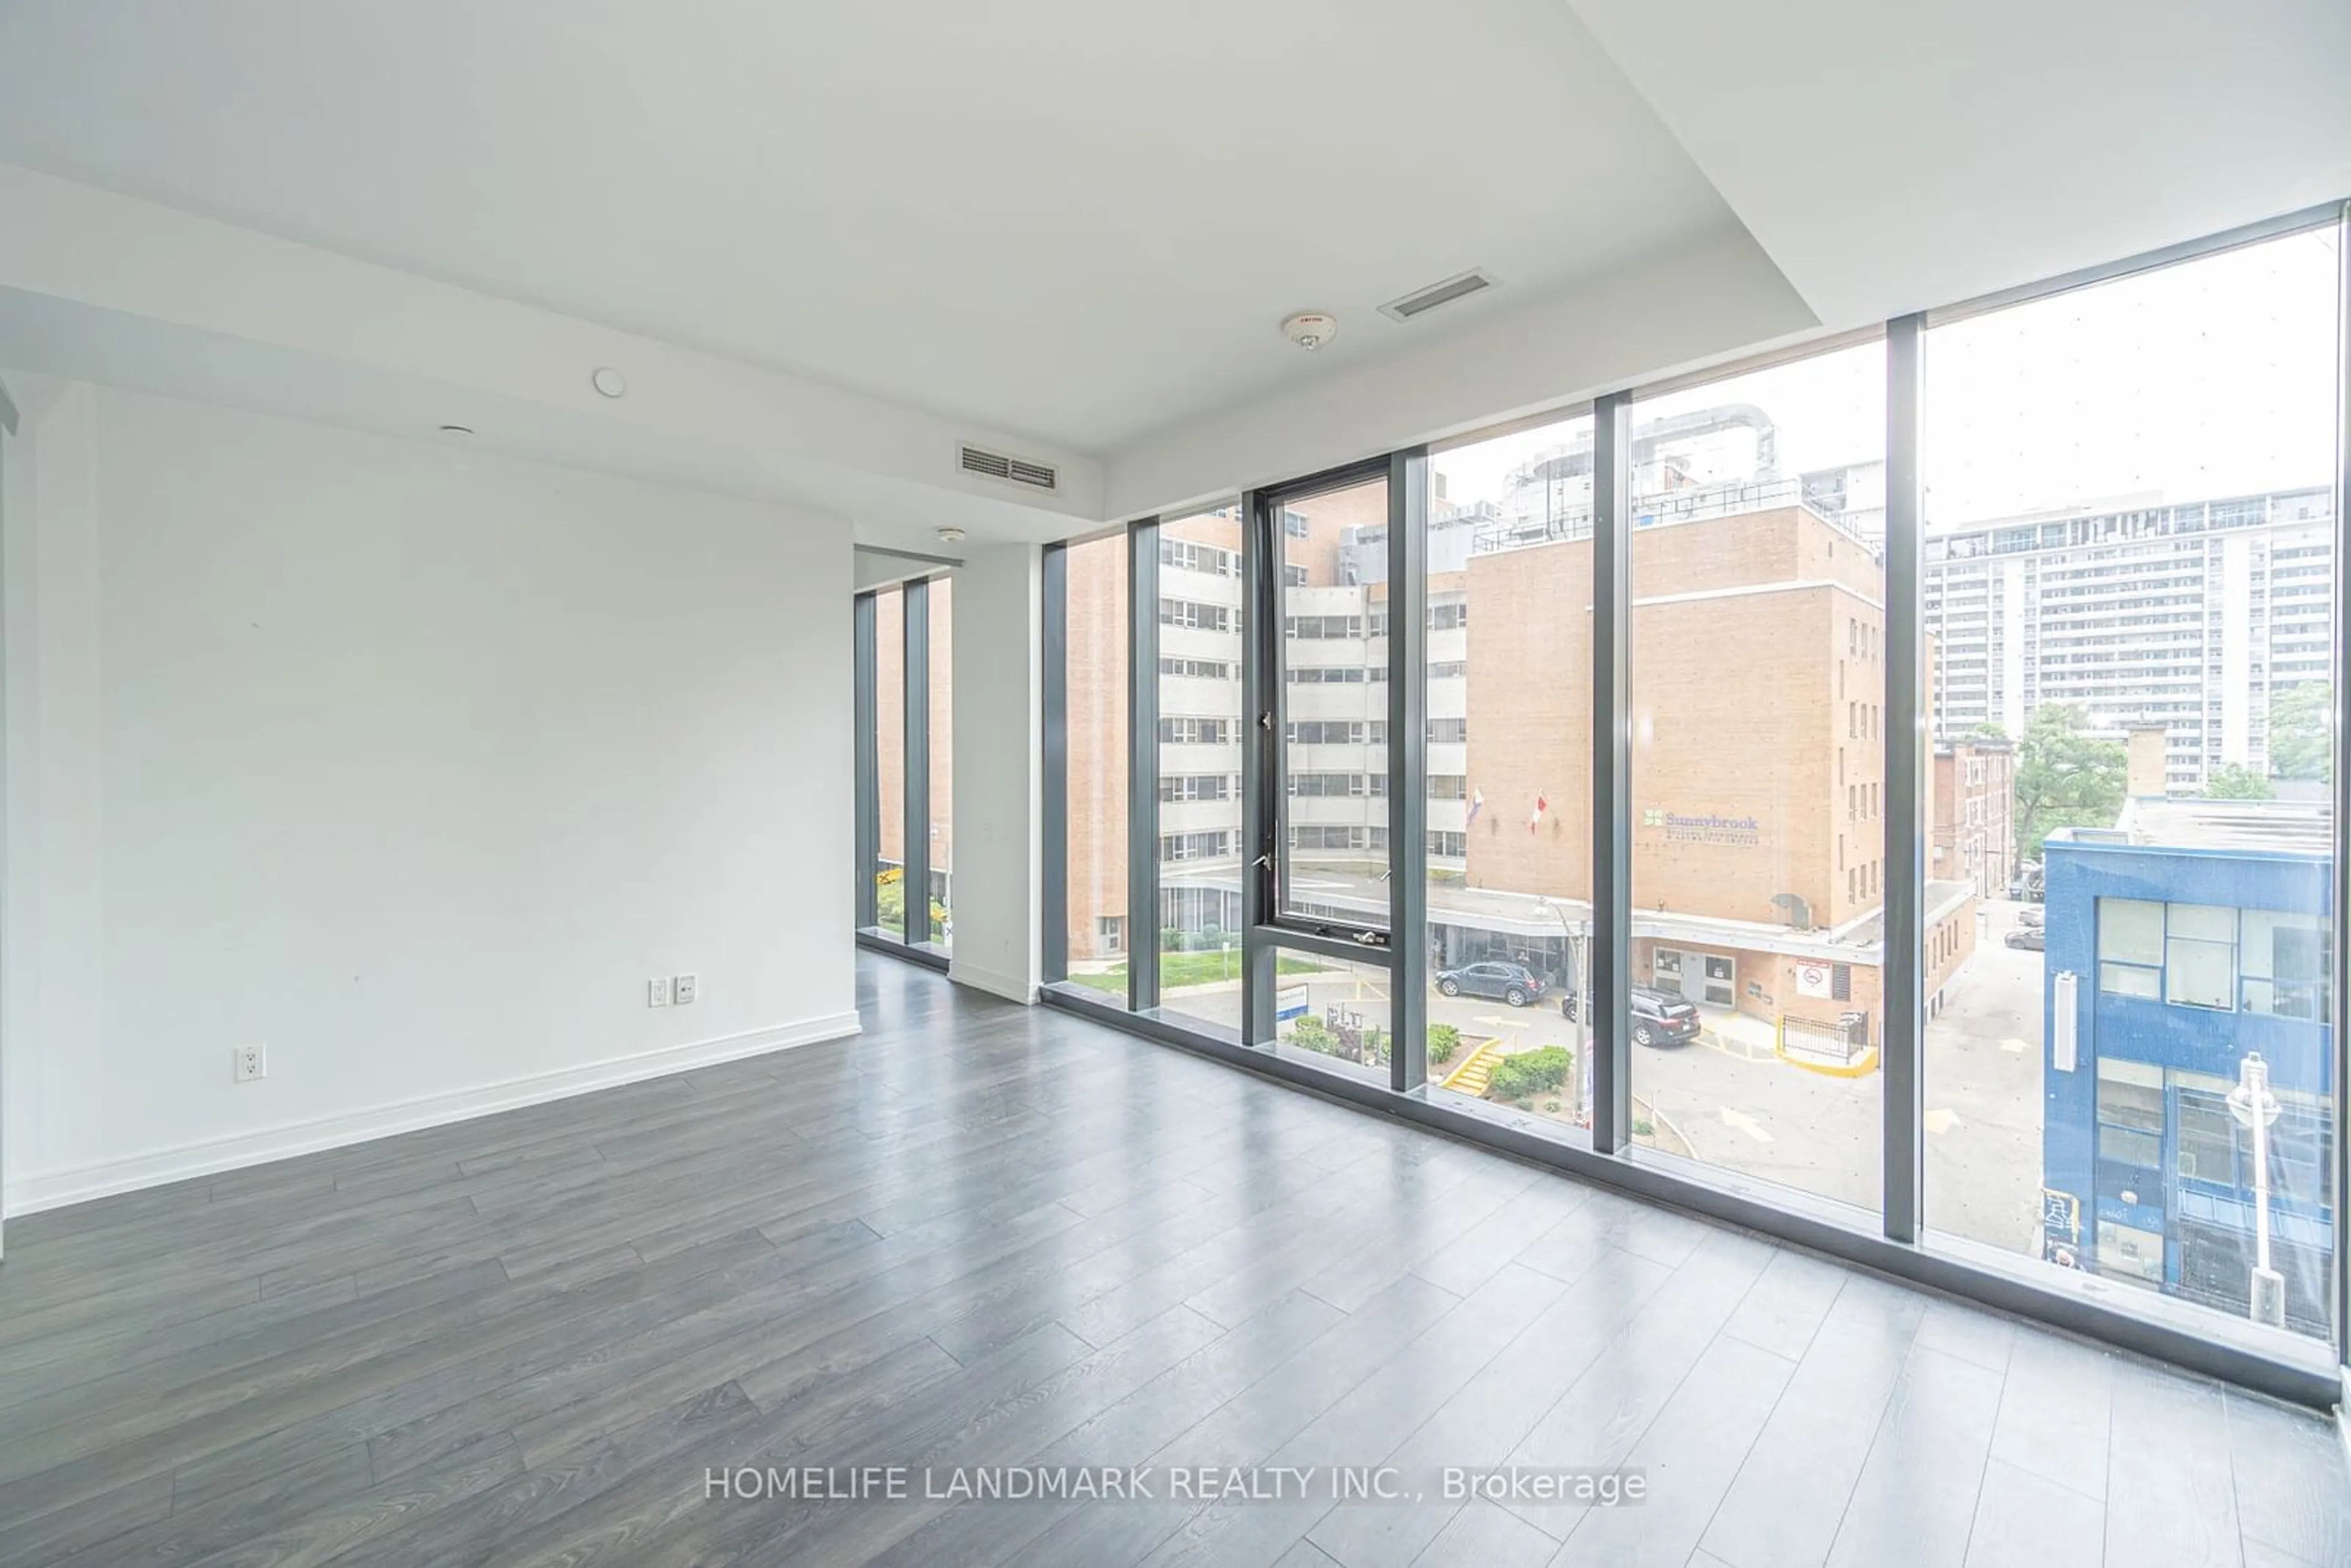 Other indoor space for 28 Wellesley St #305, Toronto Ontario M4Y 0C4